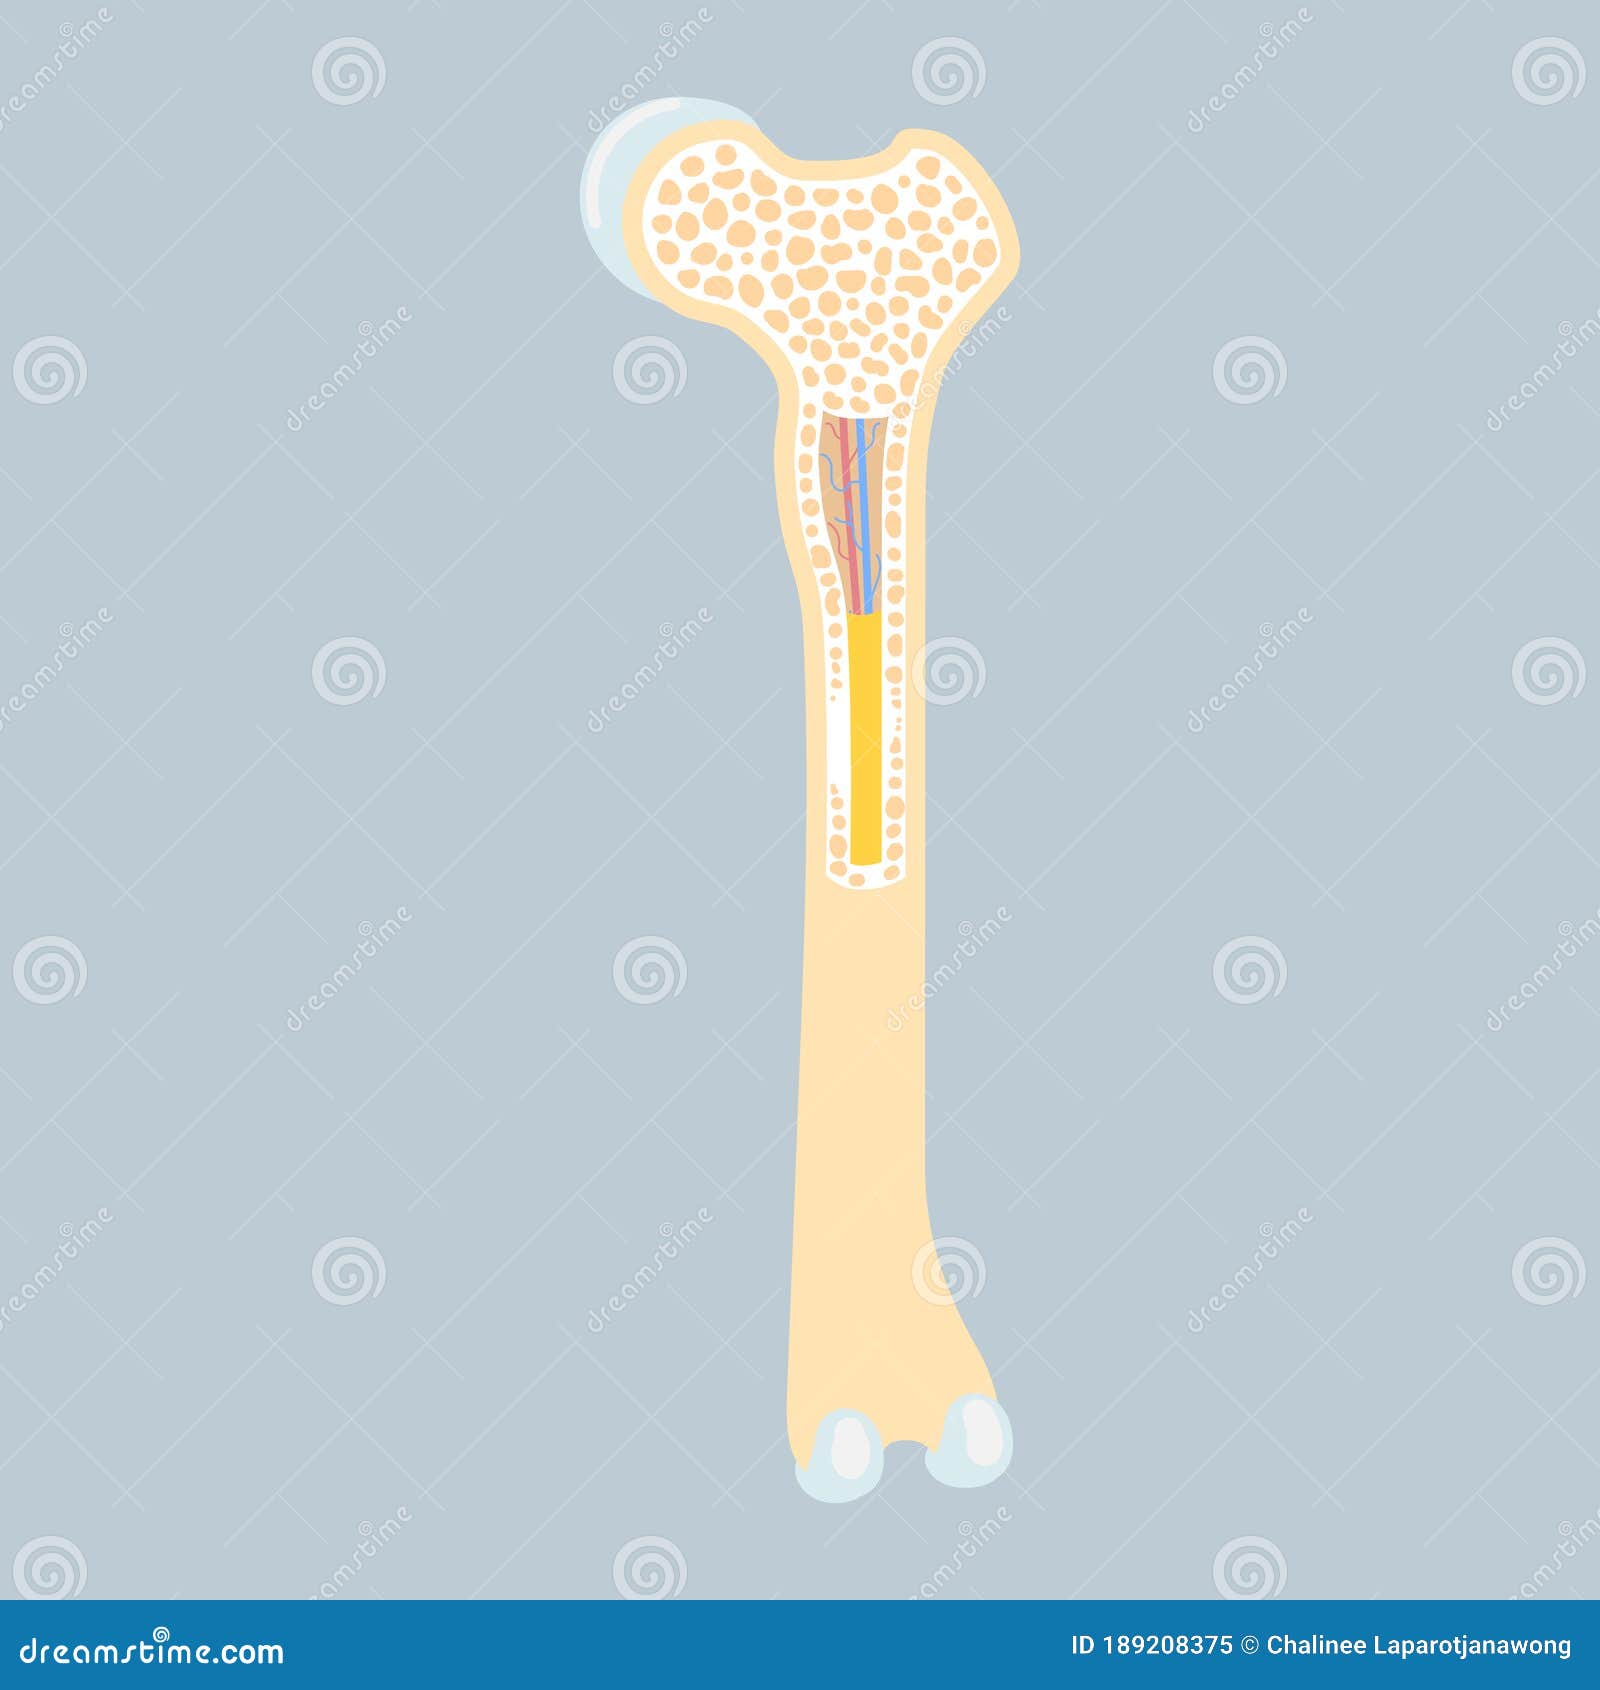 Anatomy of Long Bone Marrow Basics, Internal Organs Body Part Orthopedic  Health Care Stock Vector - Illustration of graphic, human: 189208375